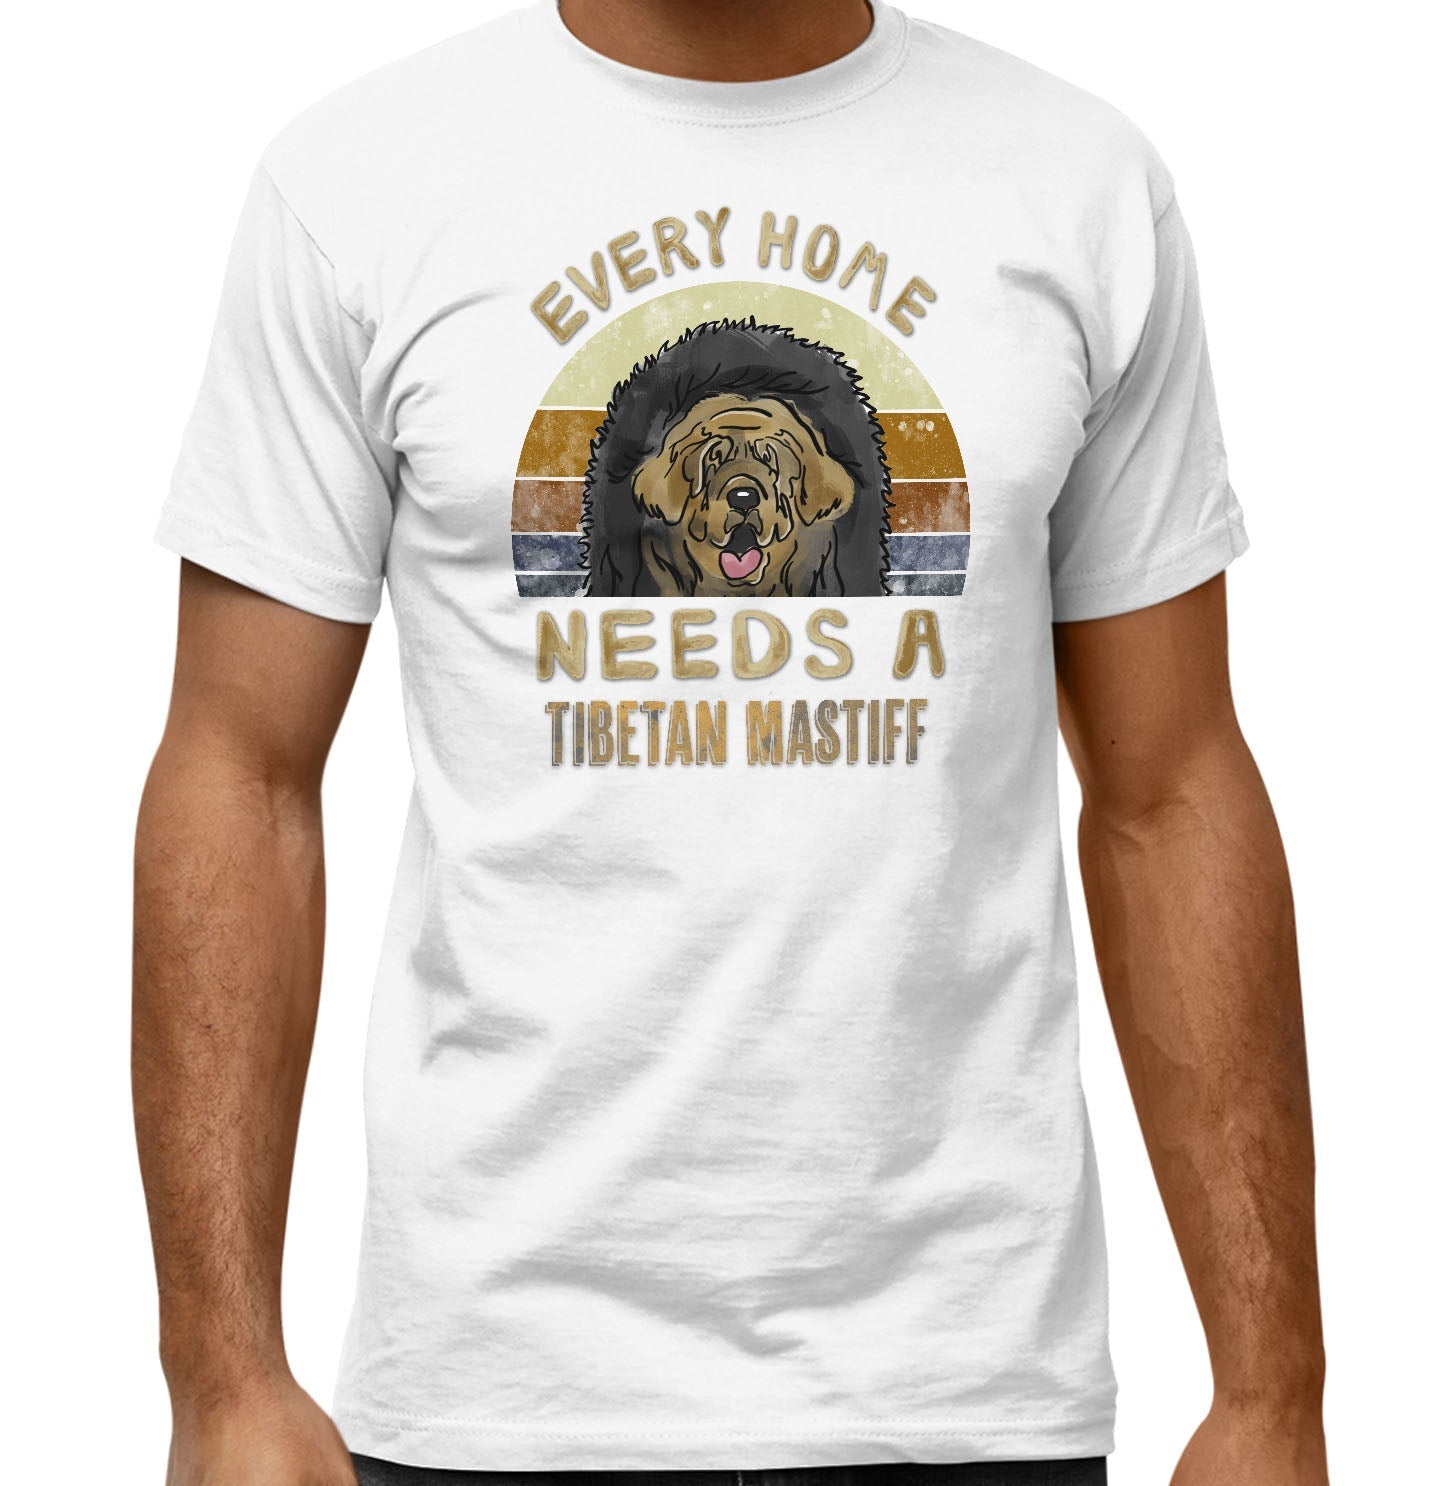 Every Home Needs a Tibetan Mastiff - Adult Unisex T-Shirt